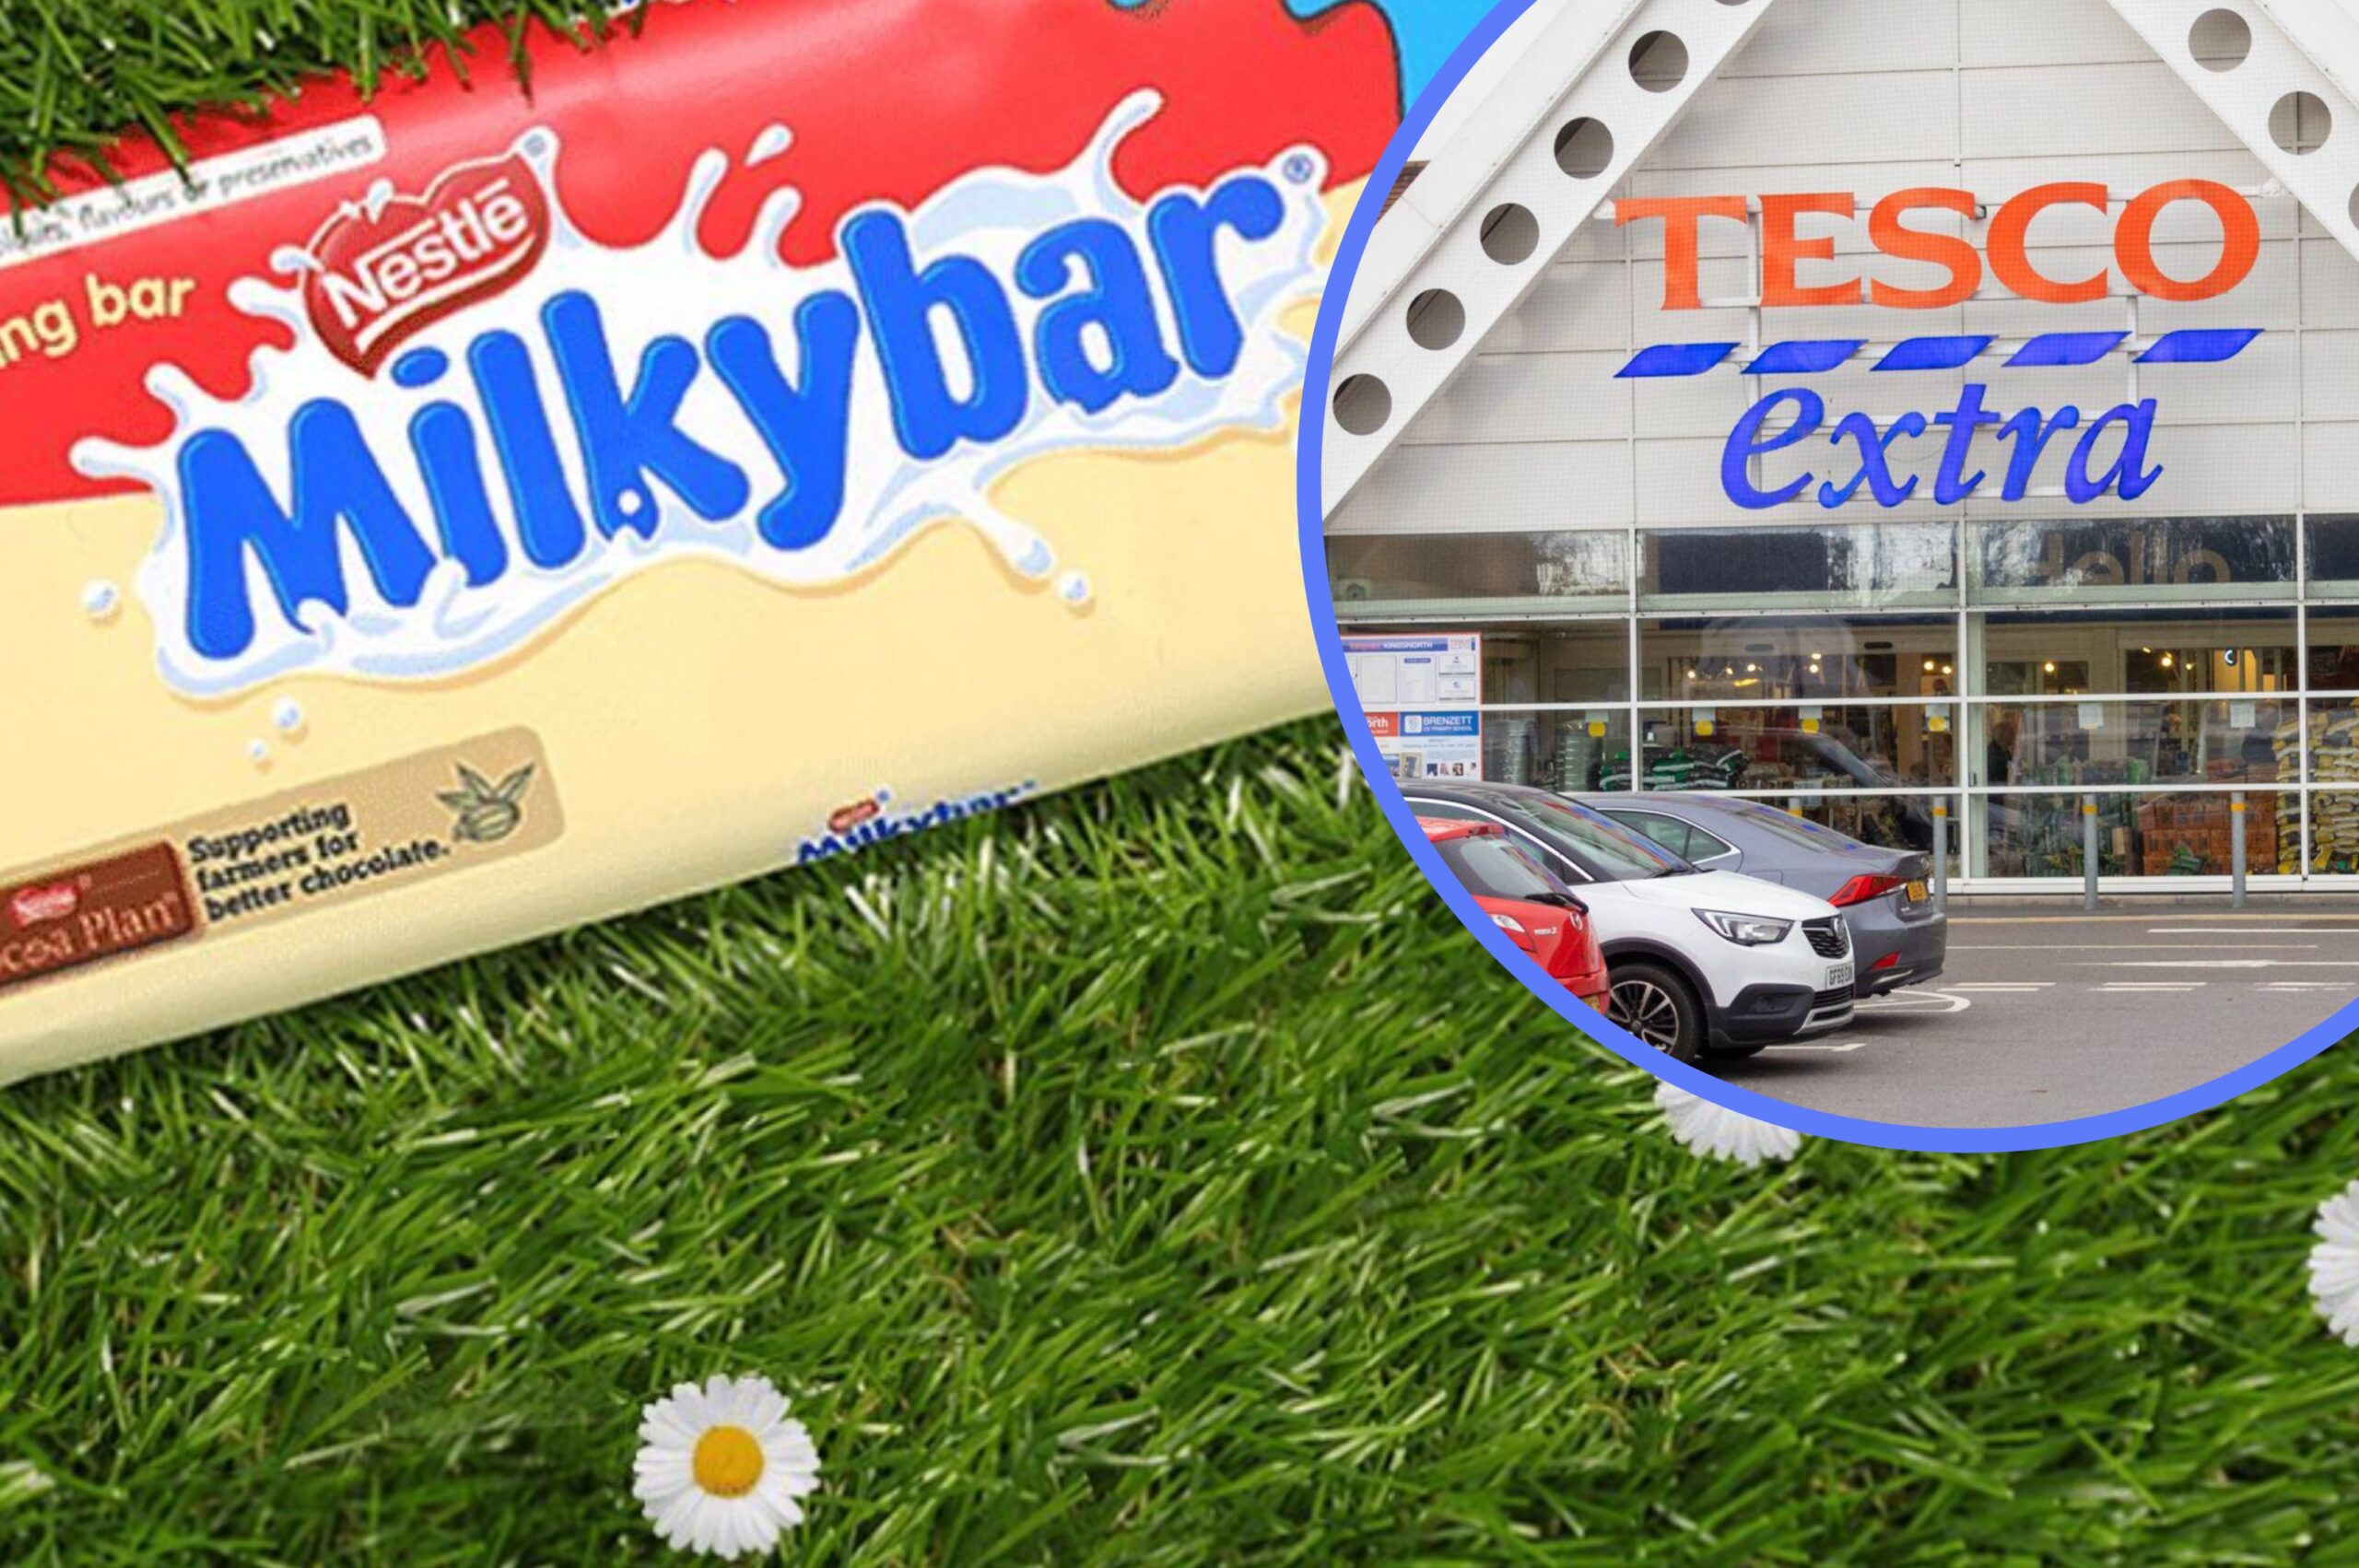 Milkybar Gold: Milkybar Launches Gold Chocolate Bar